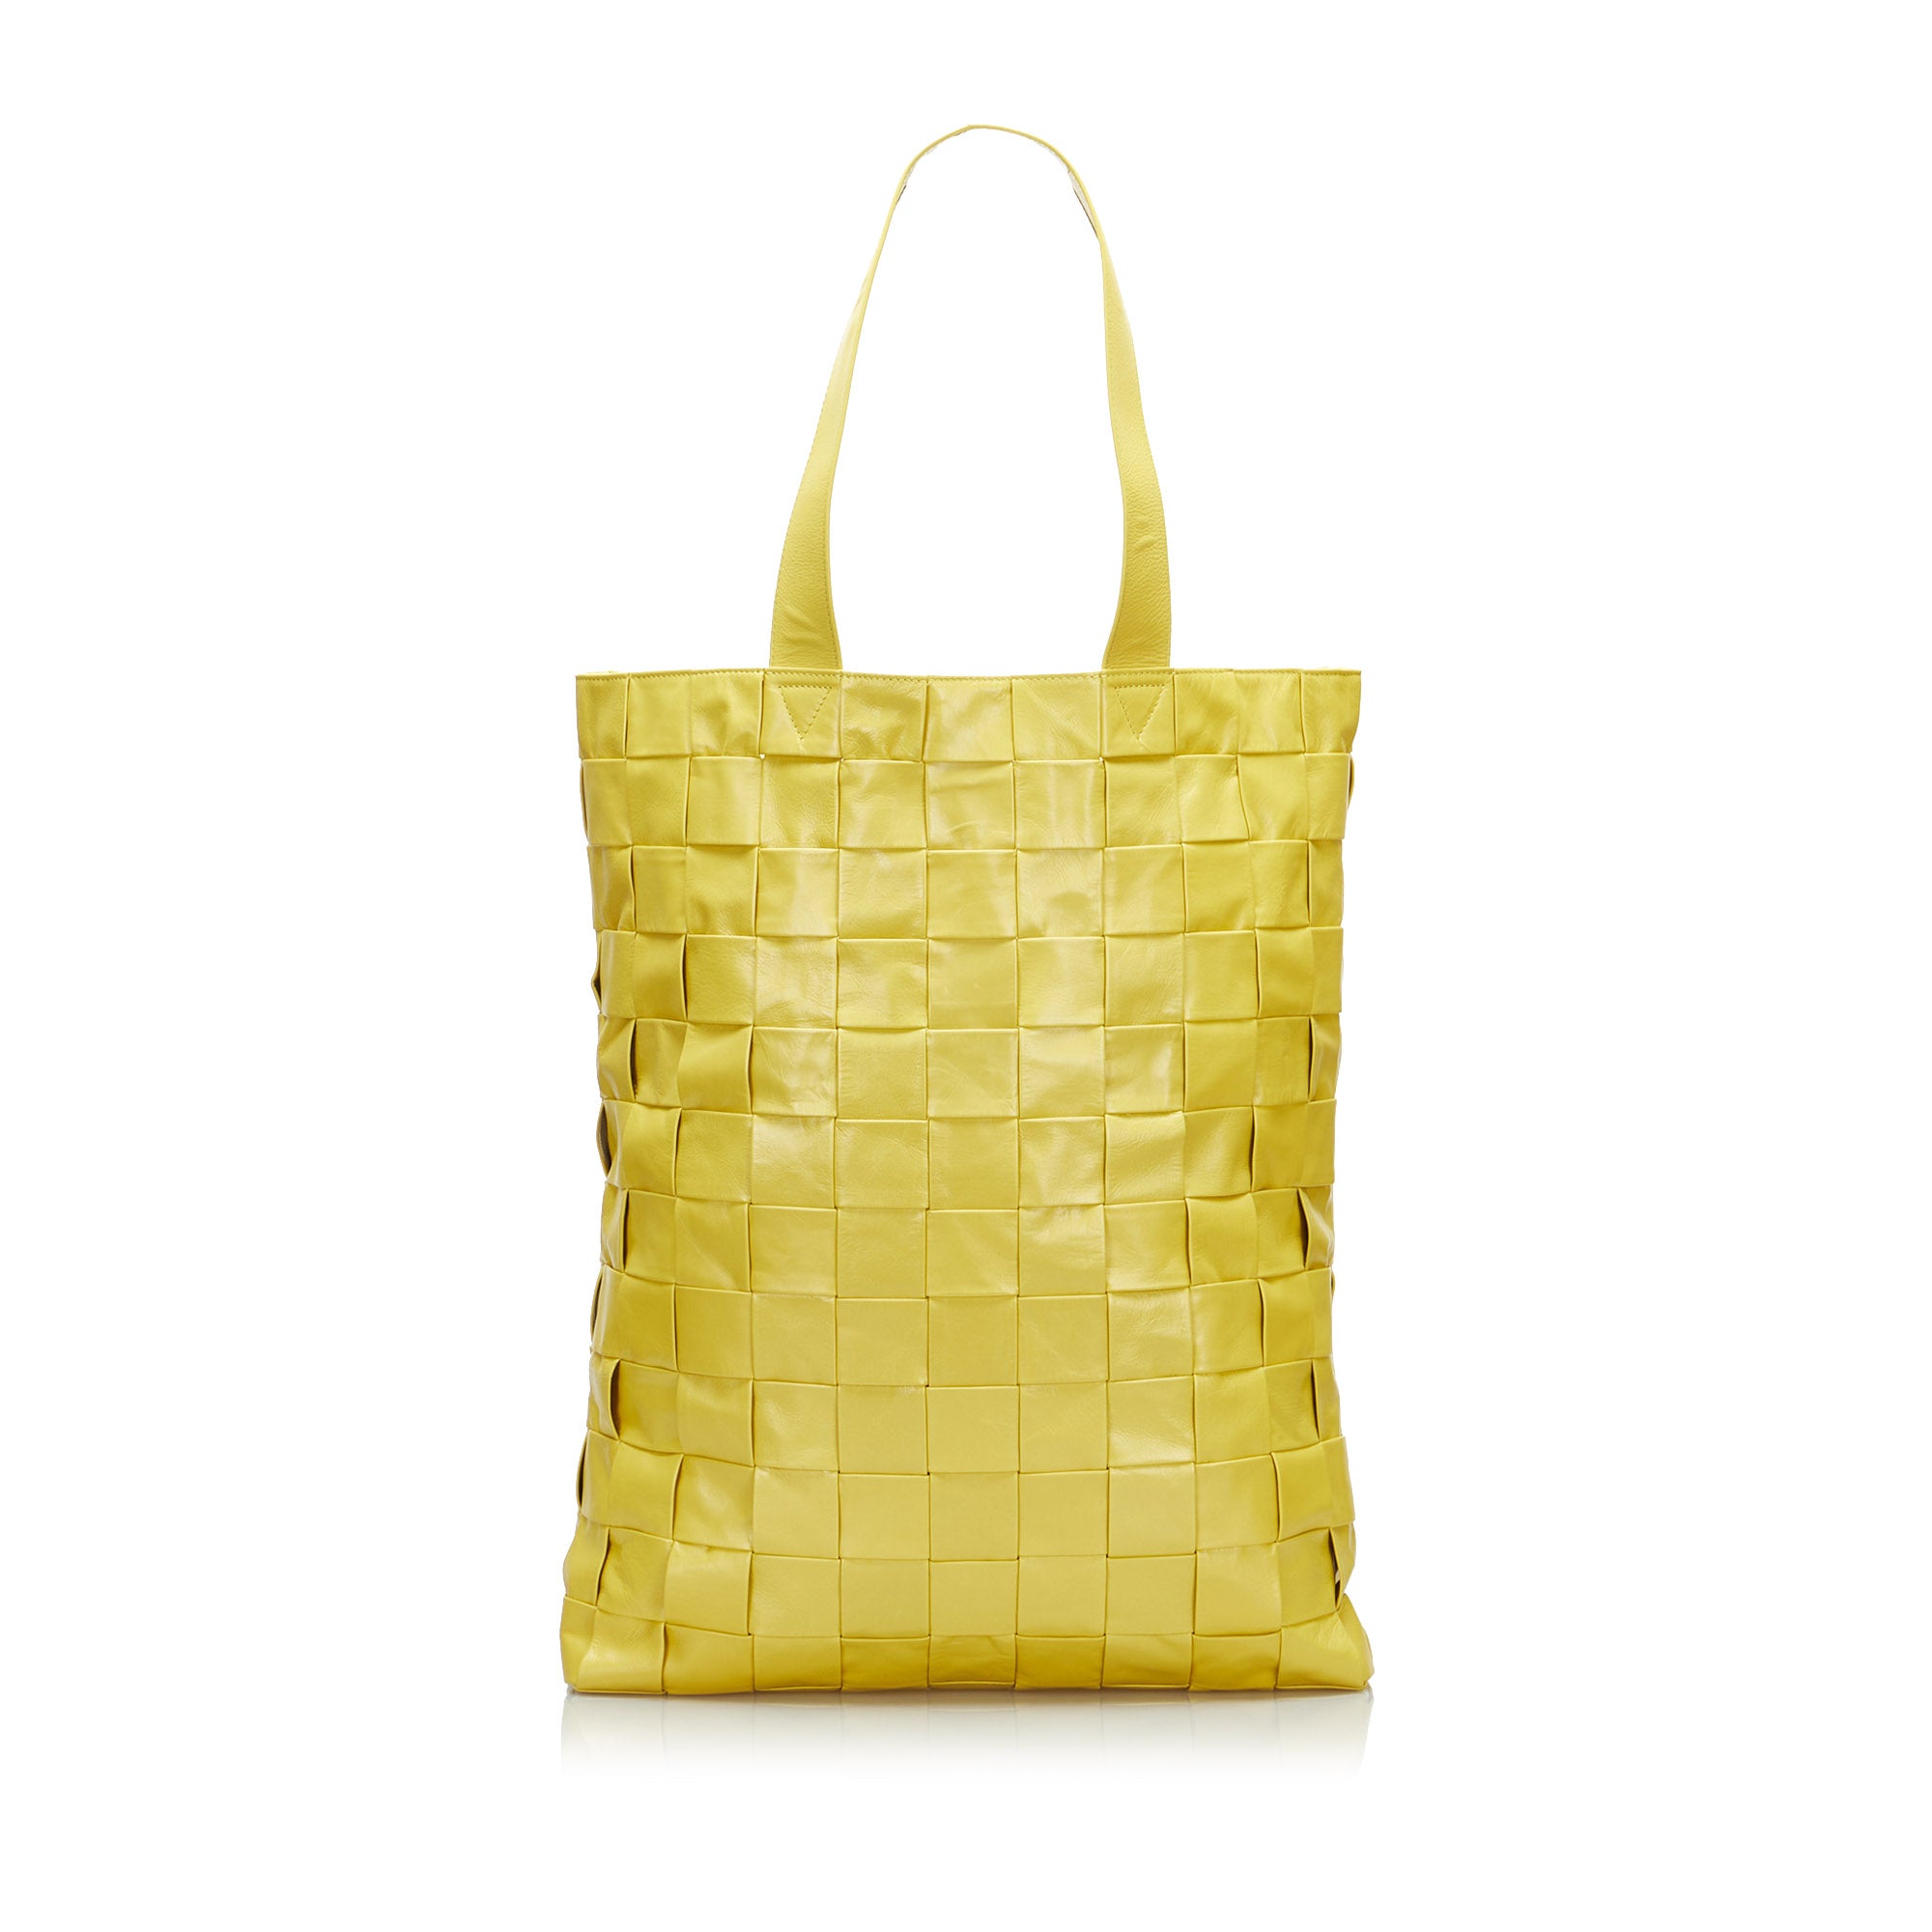 Bottega Veneta - Authenticated Point Handbag - Leather Yellow Plain for Women, Very Good Condition